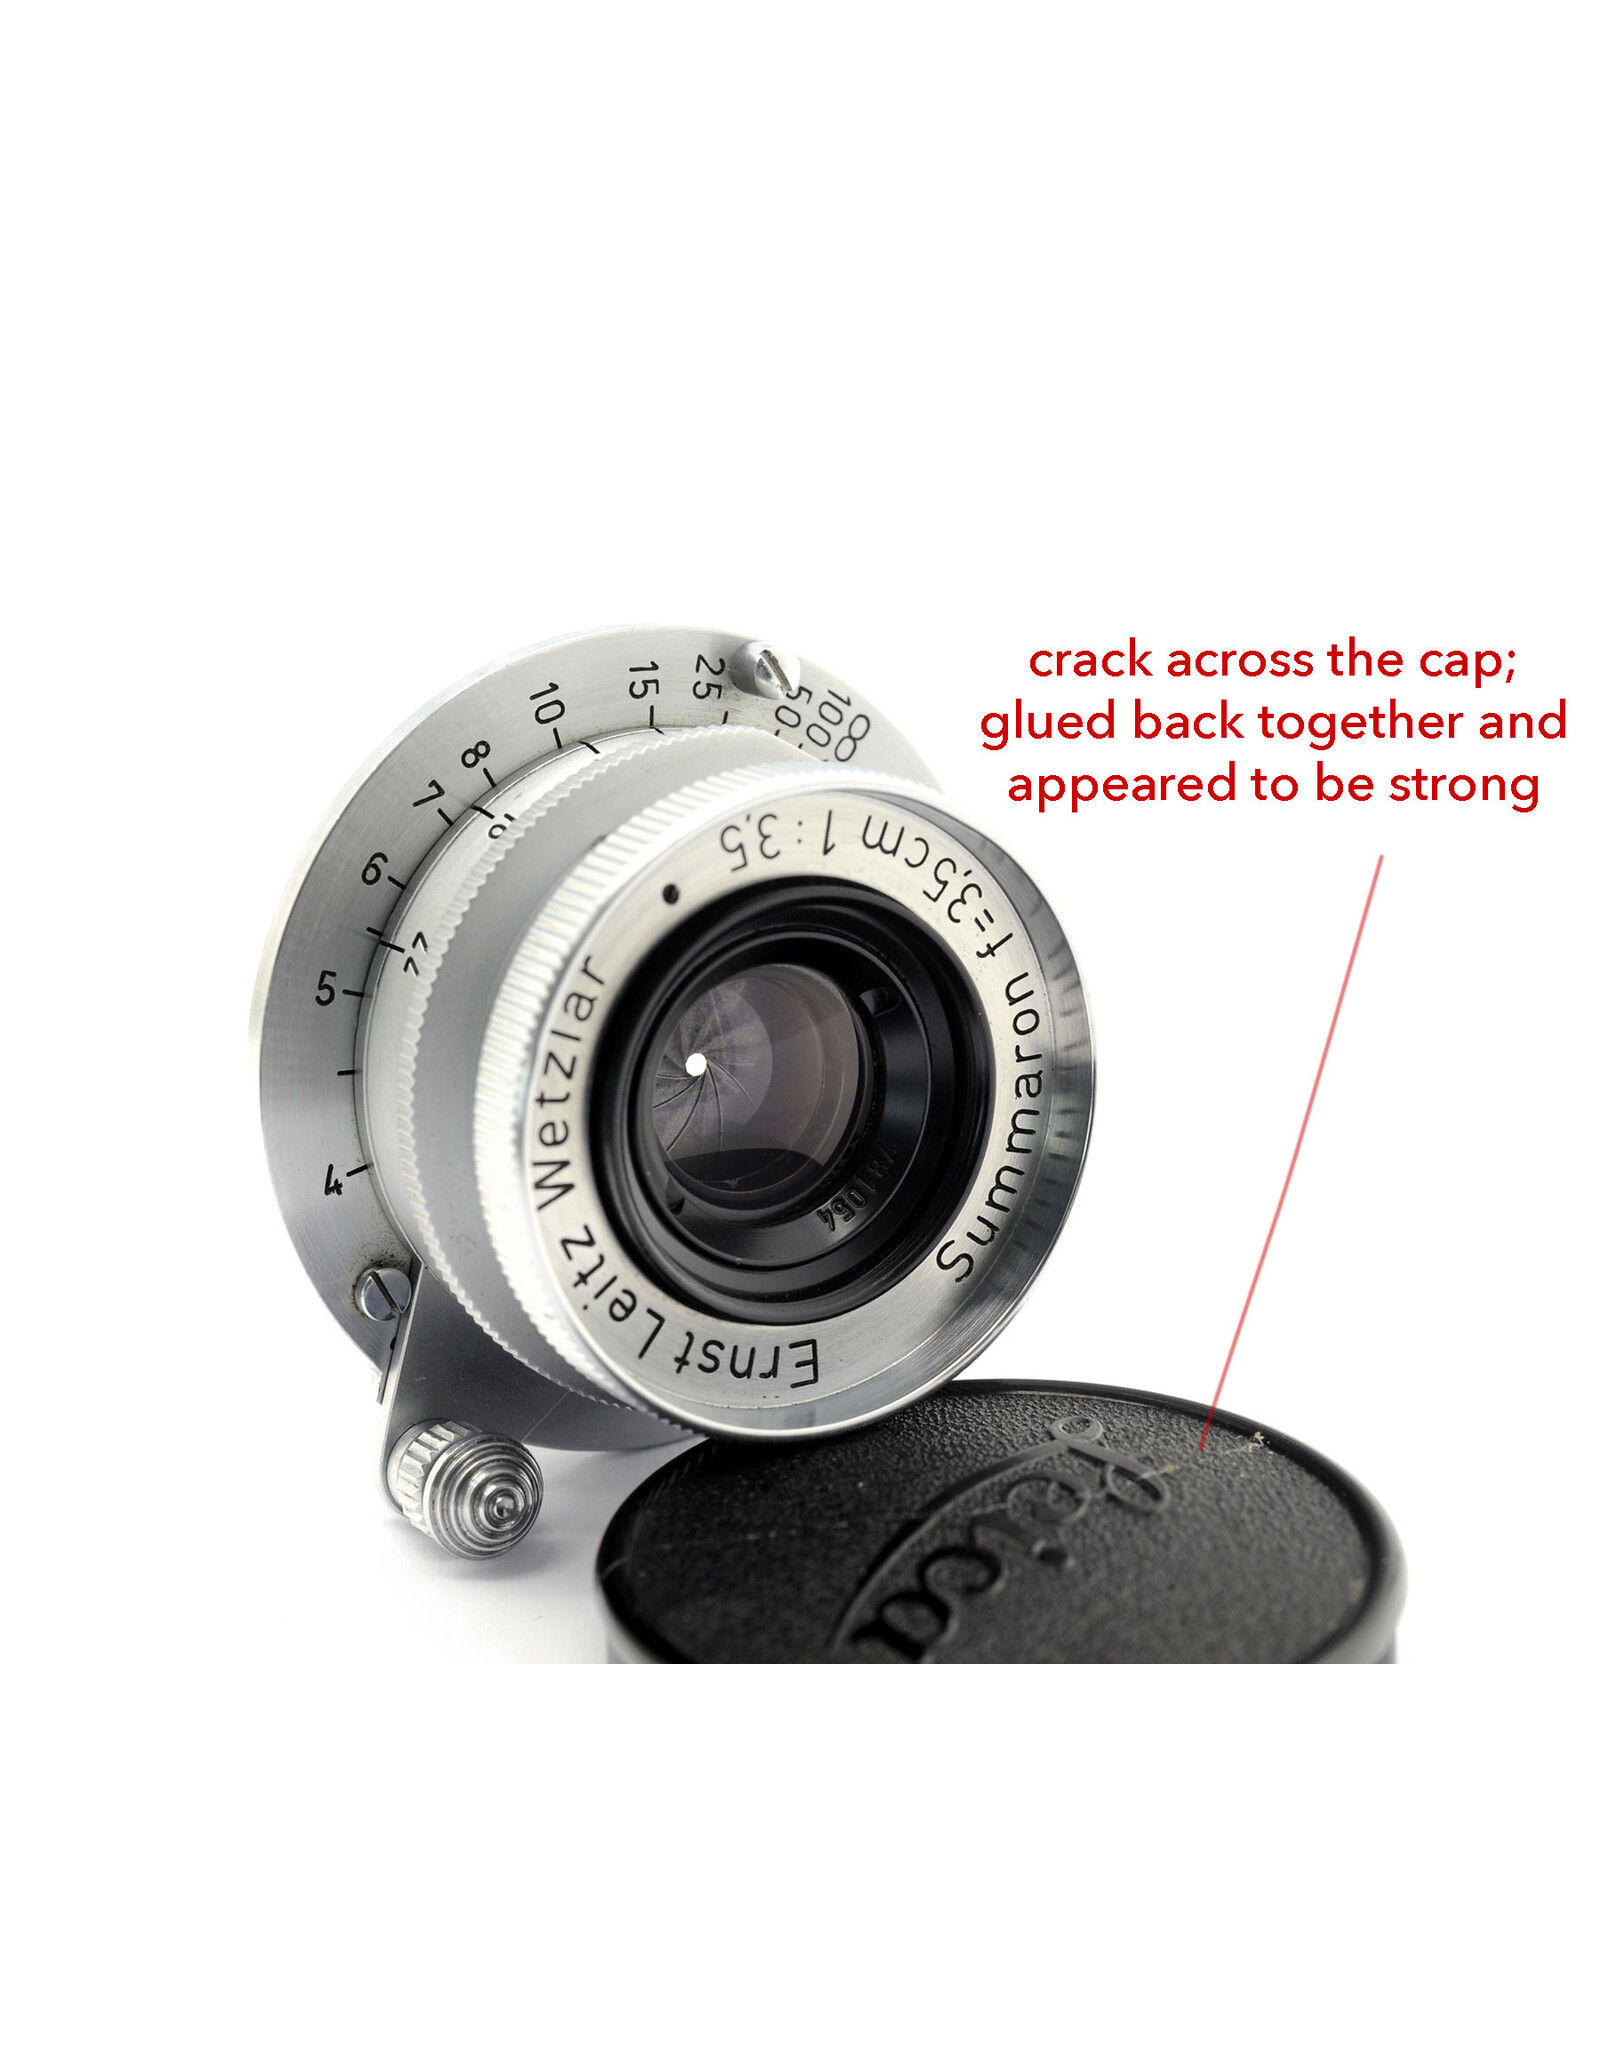 Leica Leica 3.5cm f3.5 Summaron L39   A3072102